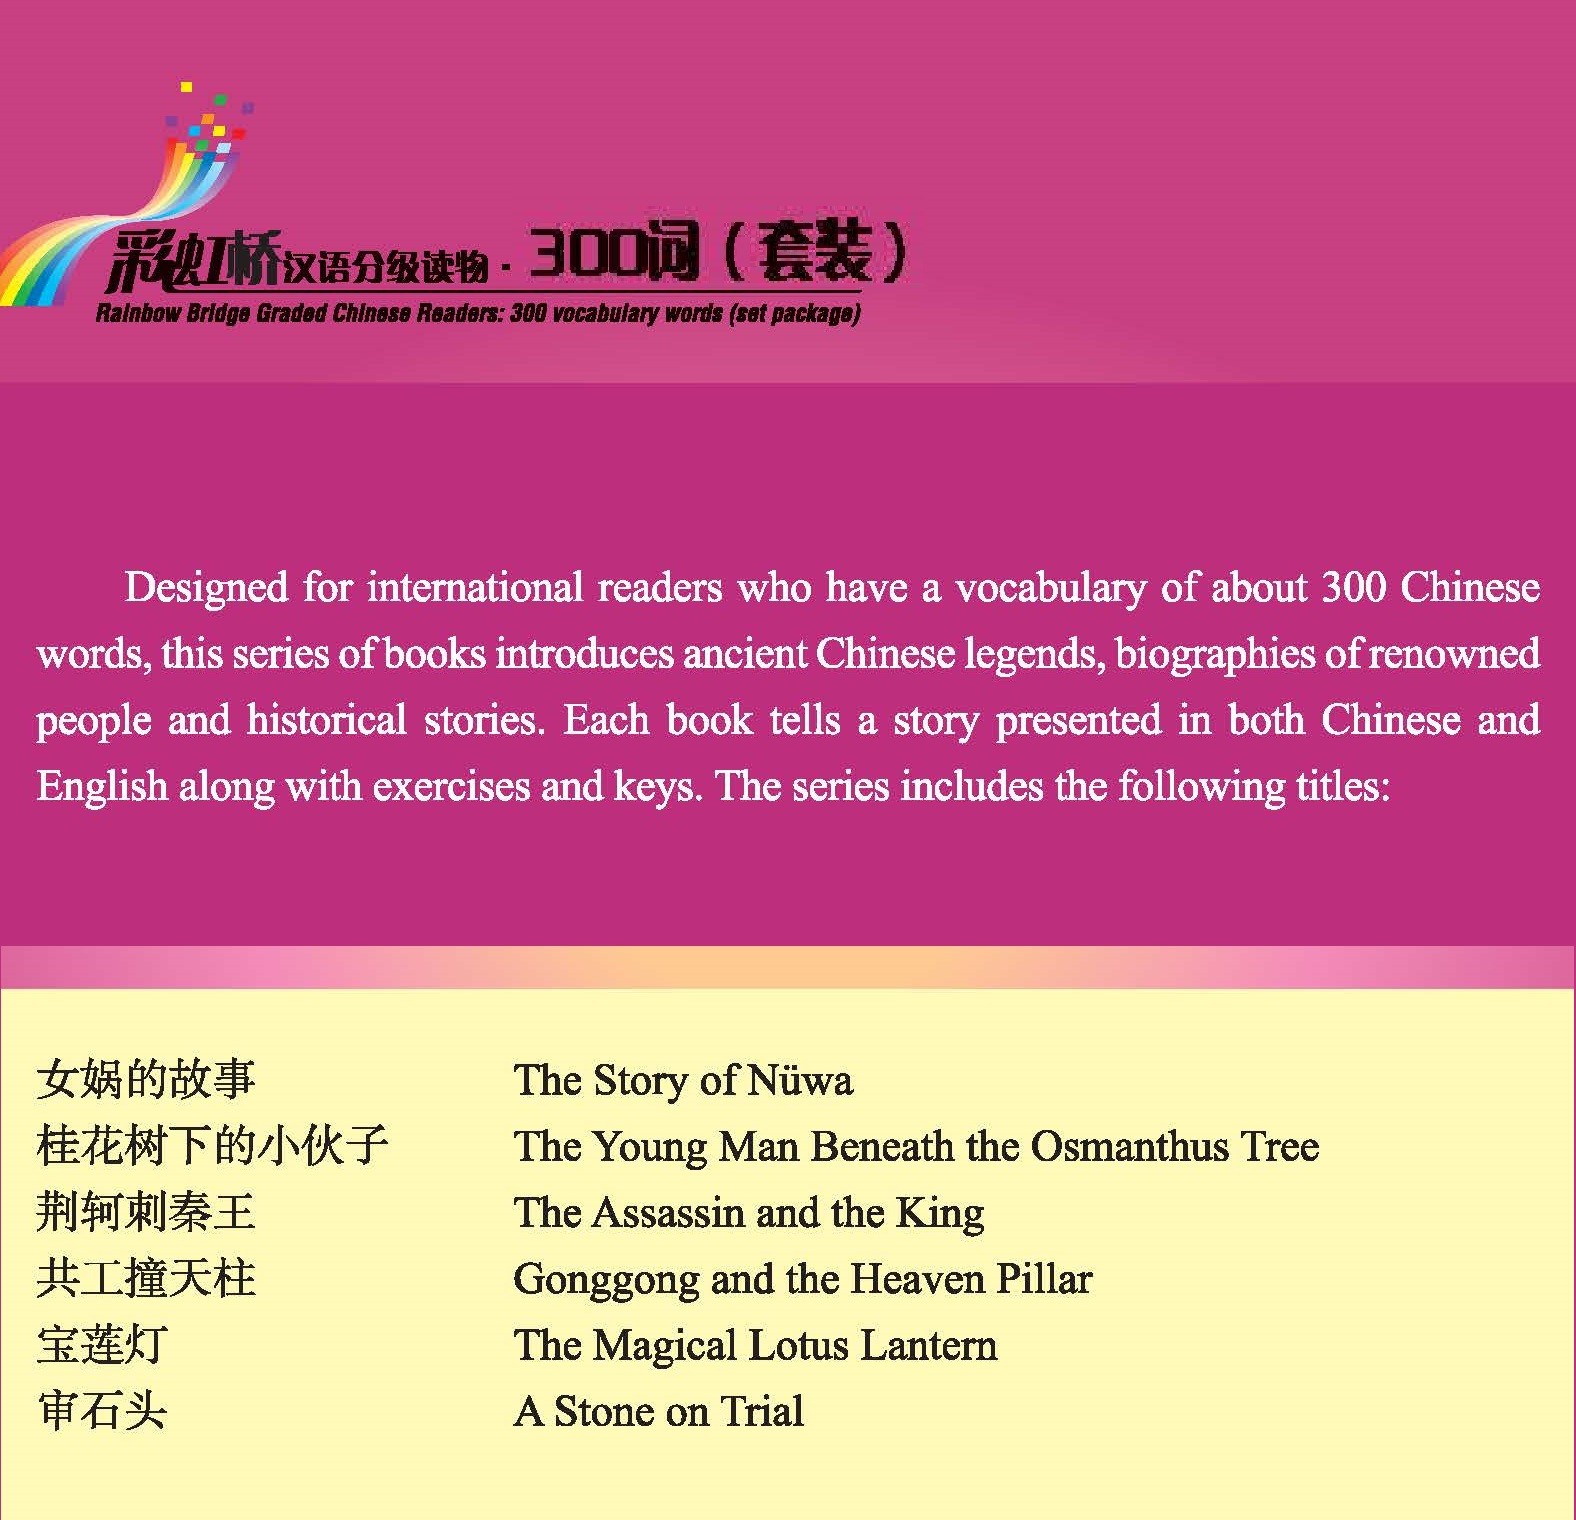 Rainbow Bridge Graded Chinese Reader 300 vocabulary words Set